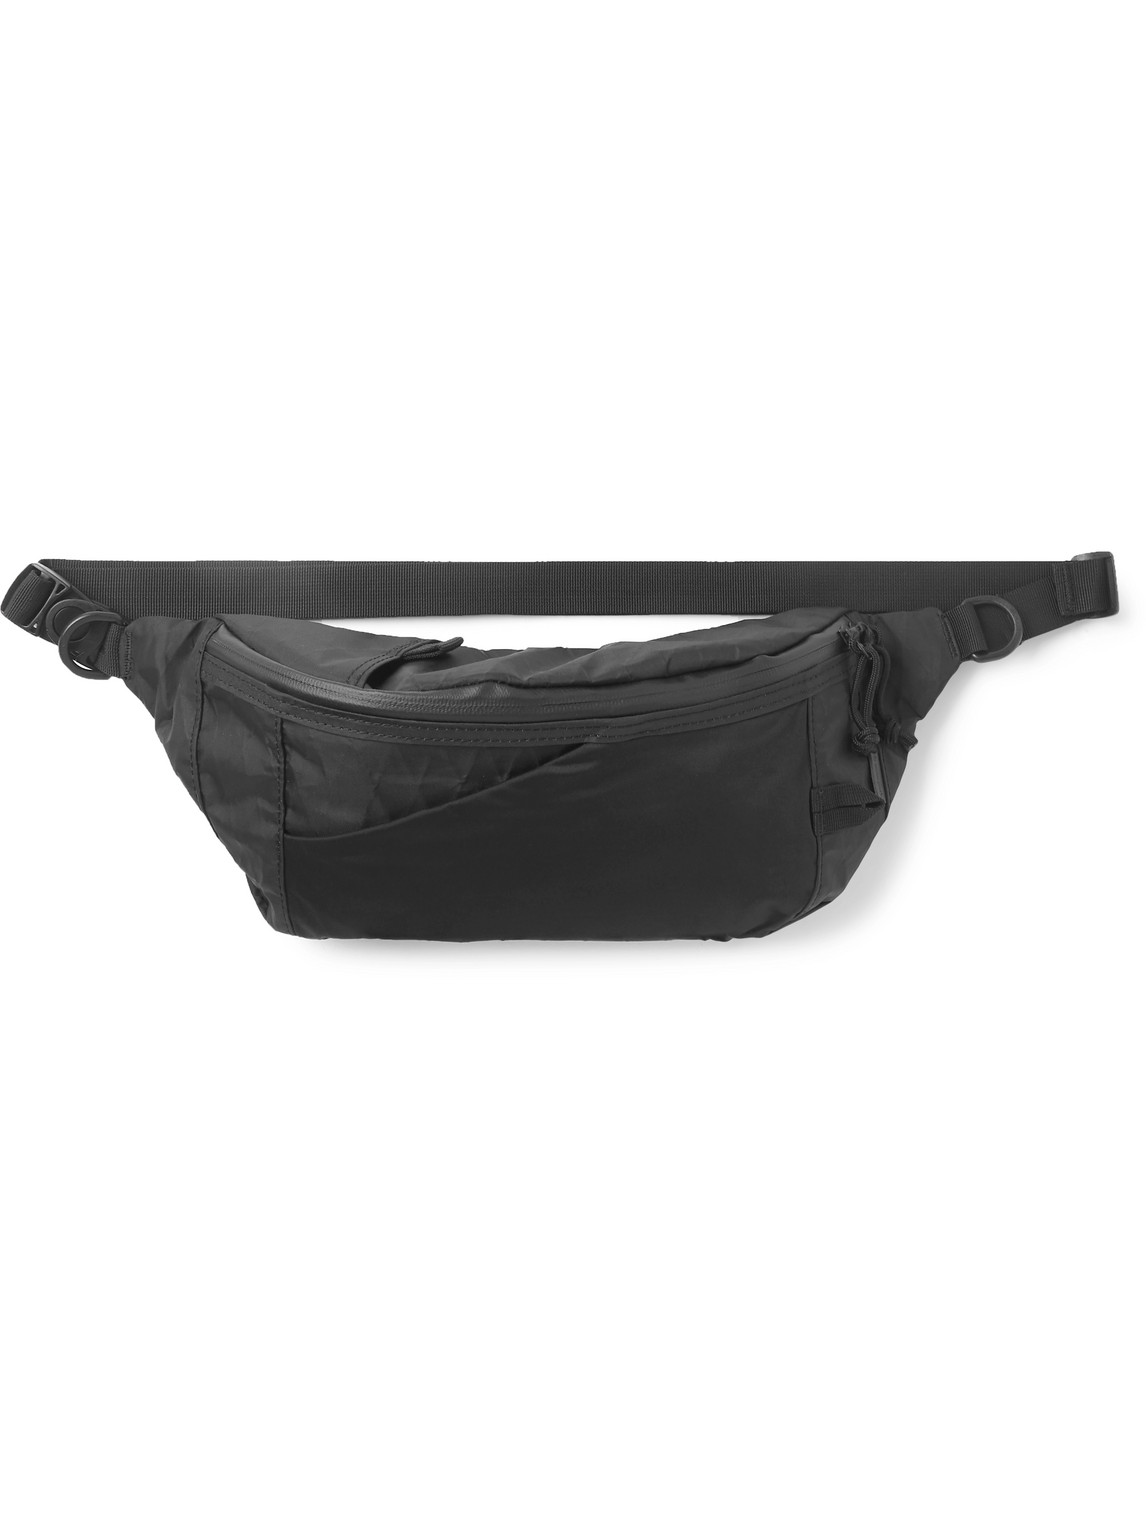 X-Pac Nylon Belt Bag